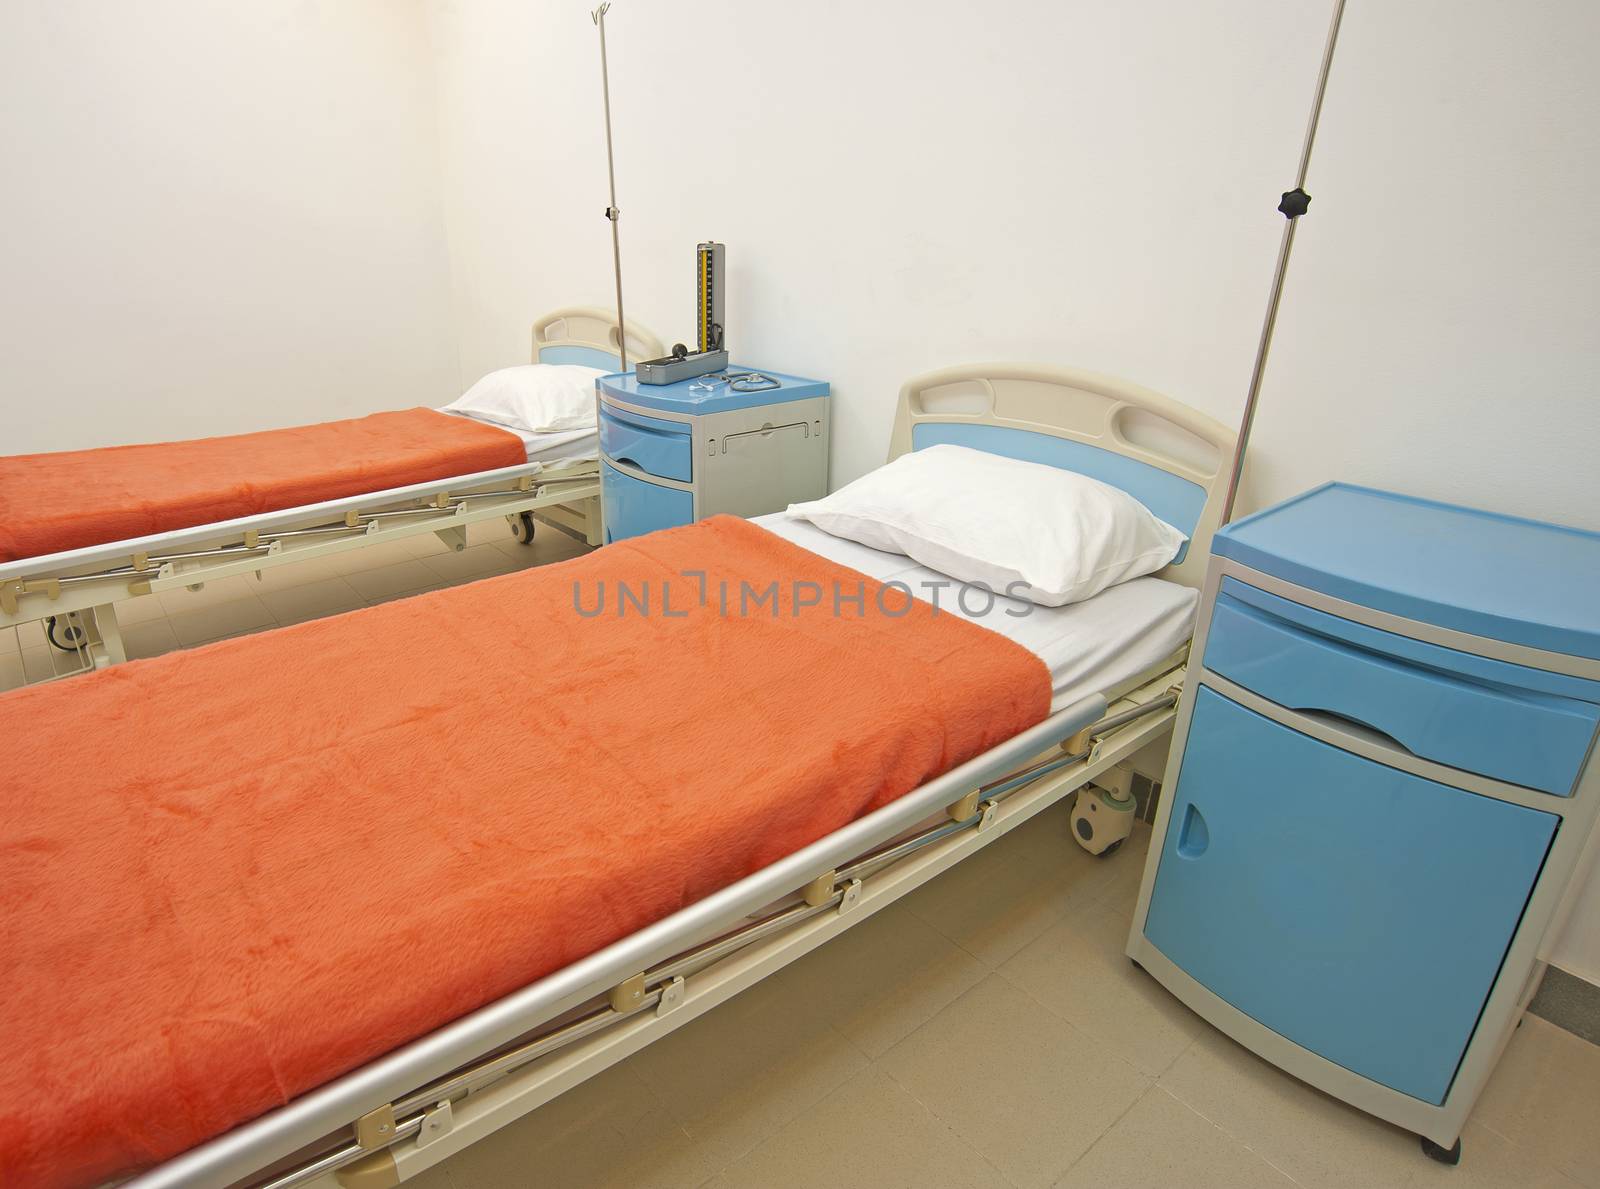 Beds in a hospital ward by paulvinten